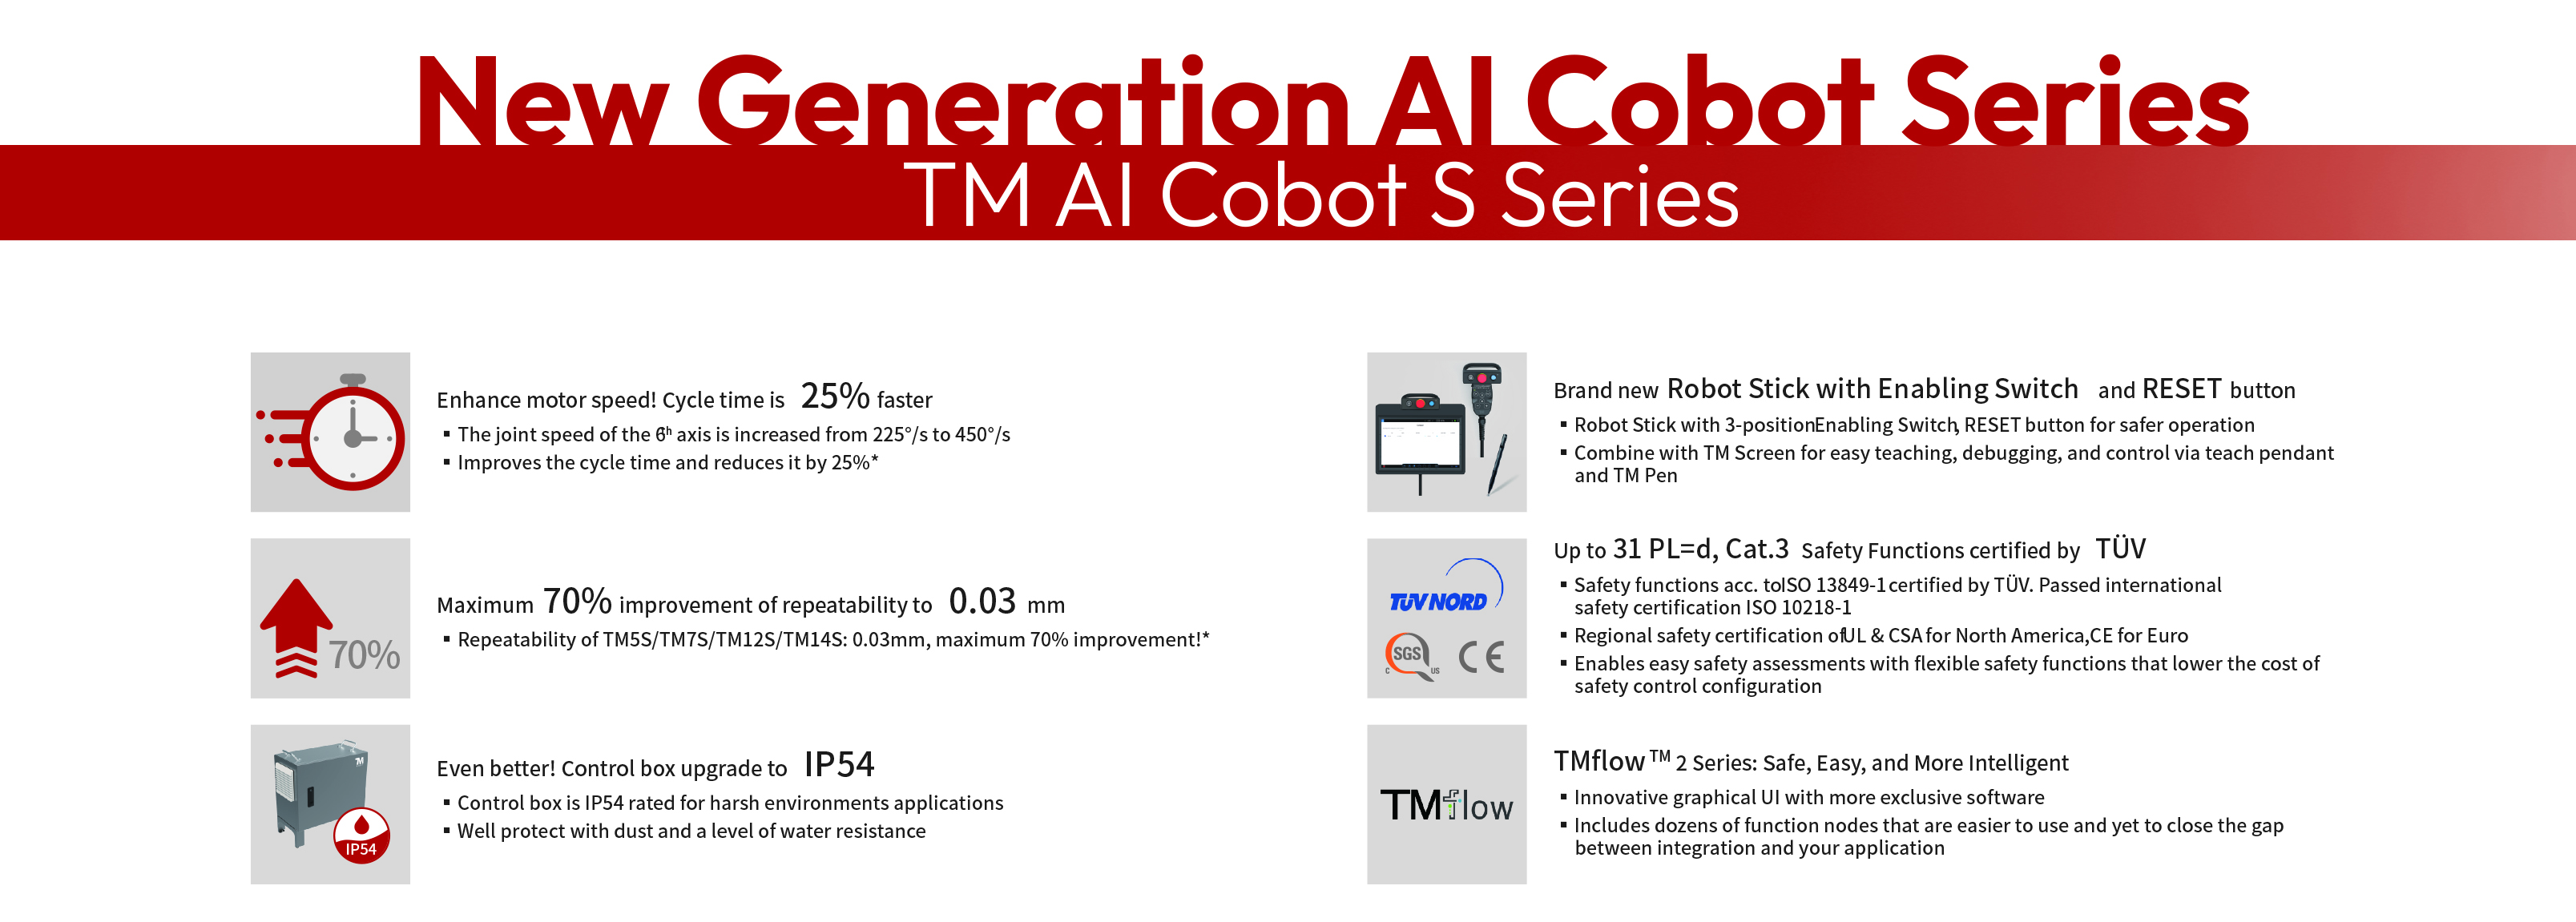 New Generation AI Cobot Series